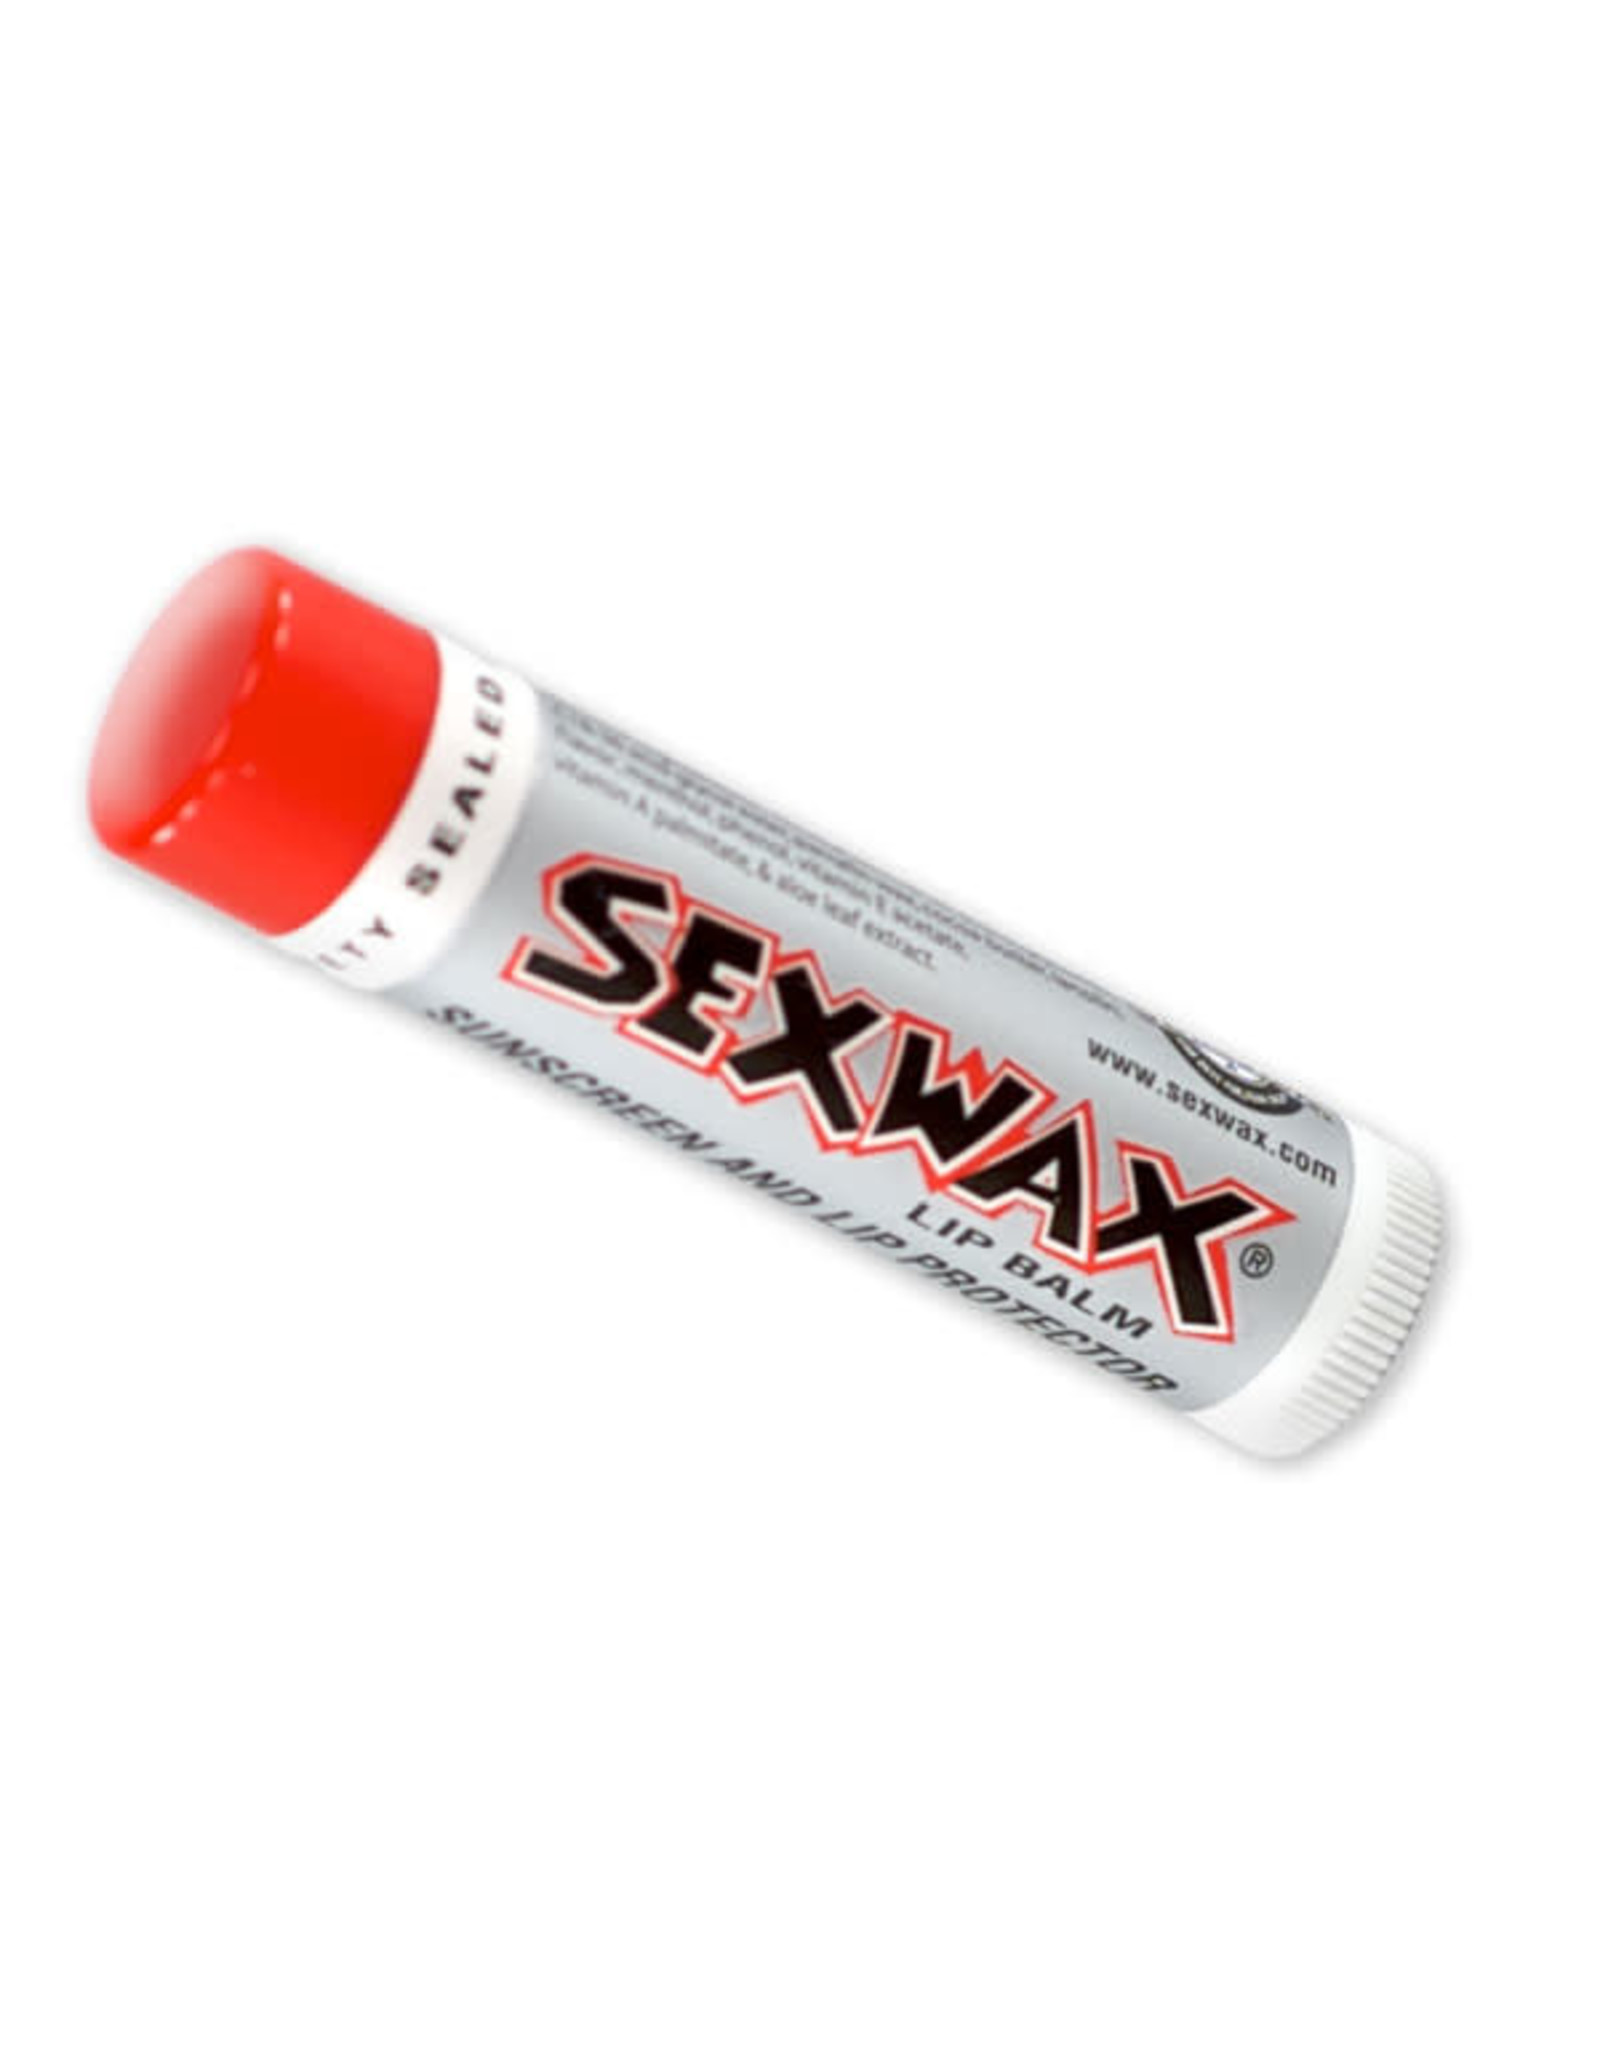 Sex Wax Mr. Zogs Sexwax Dermatone Lip Balm SPF 30